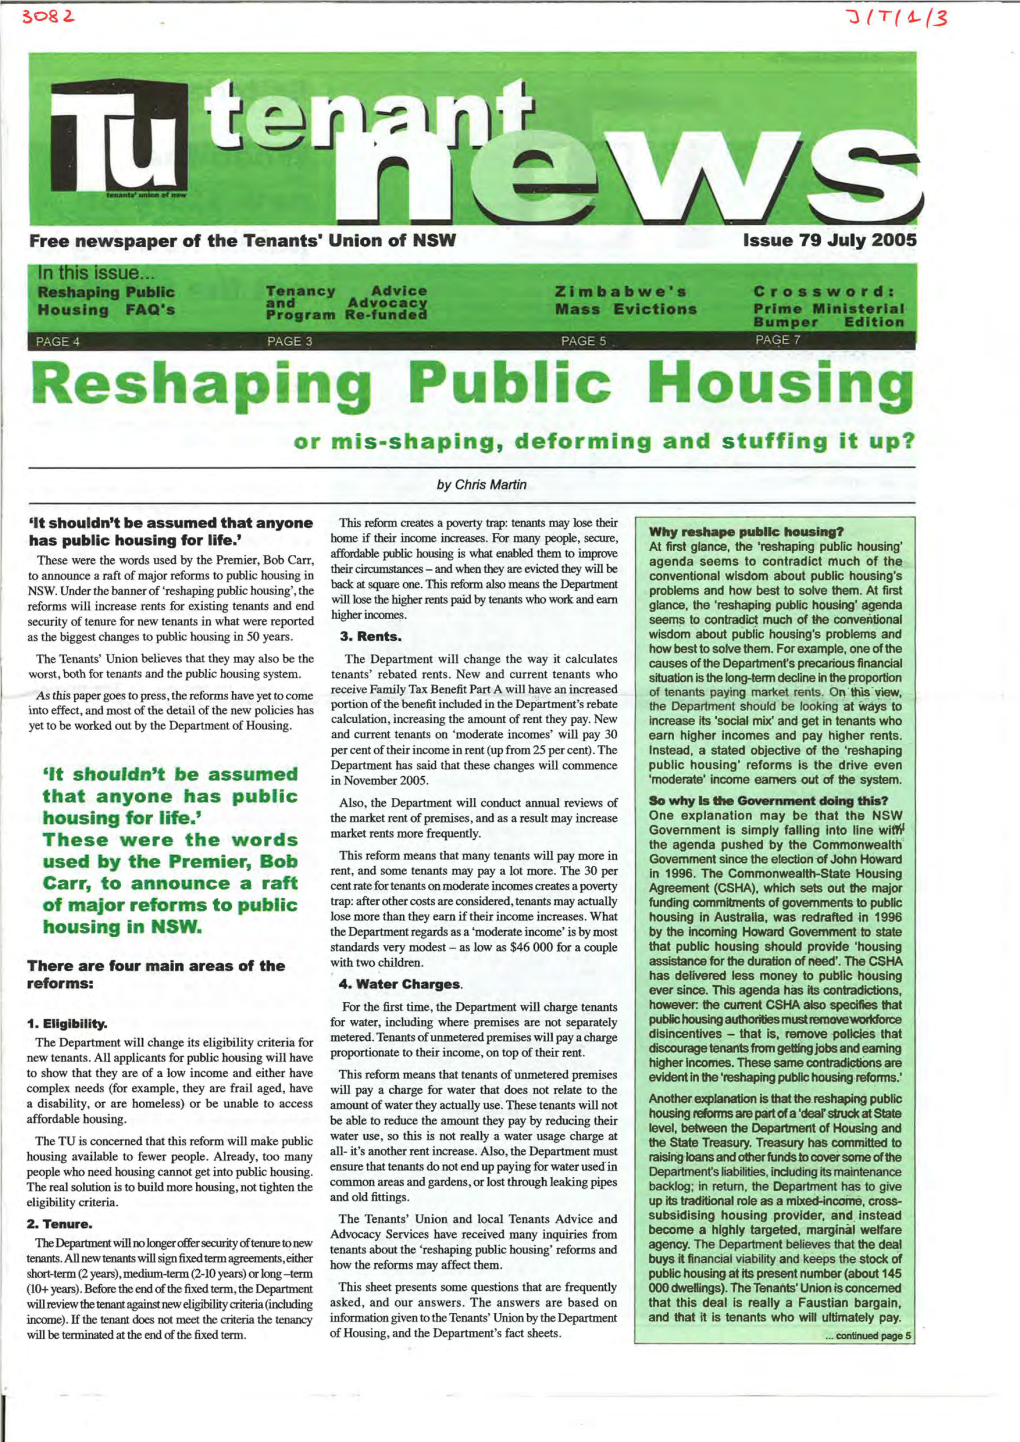 Reshaping Public Housing Faqs